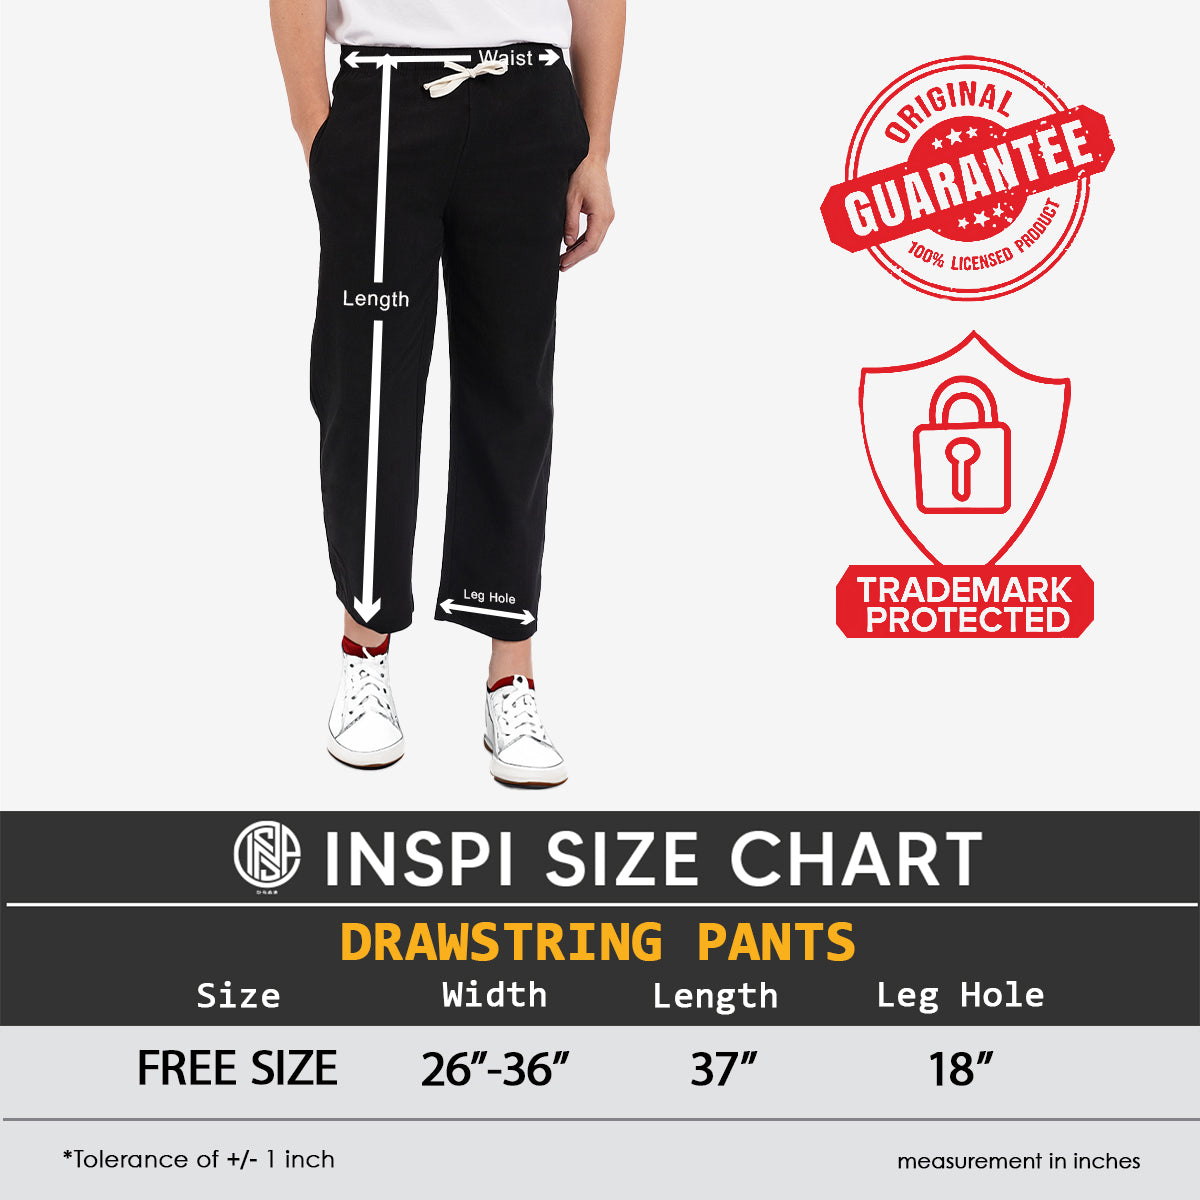 INSPI Drawstring Pants Black